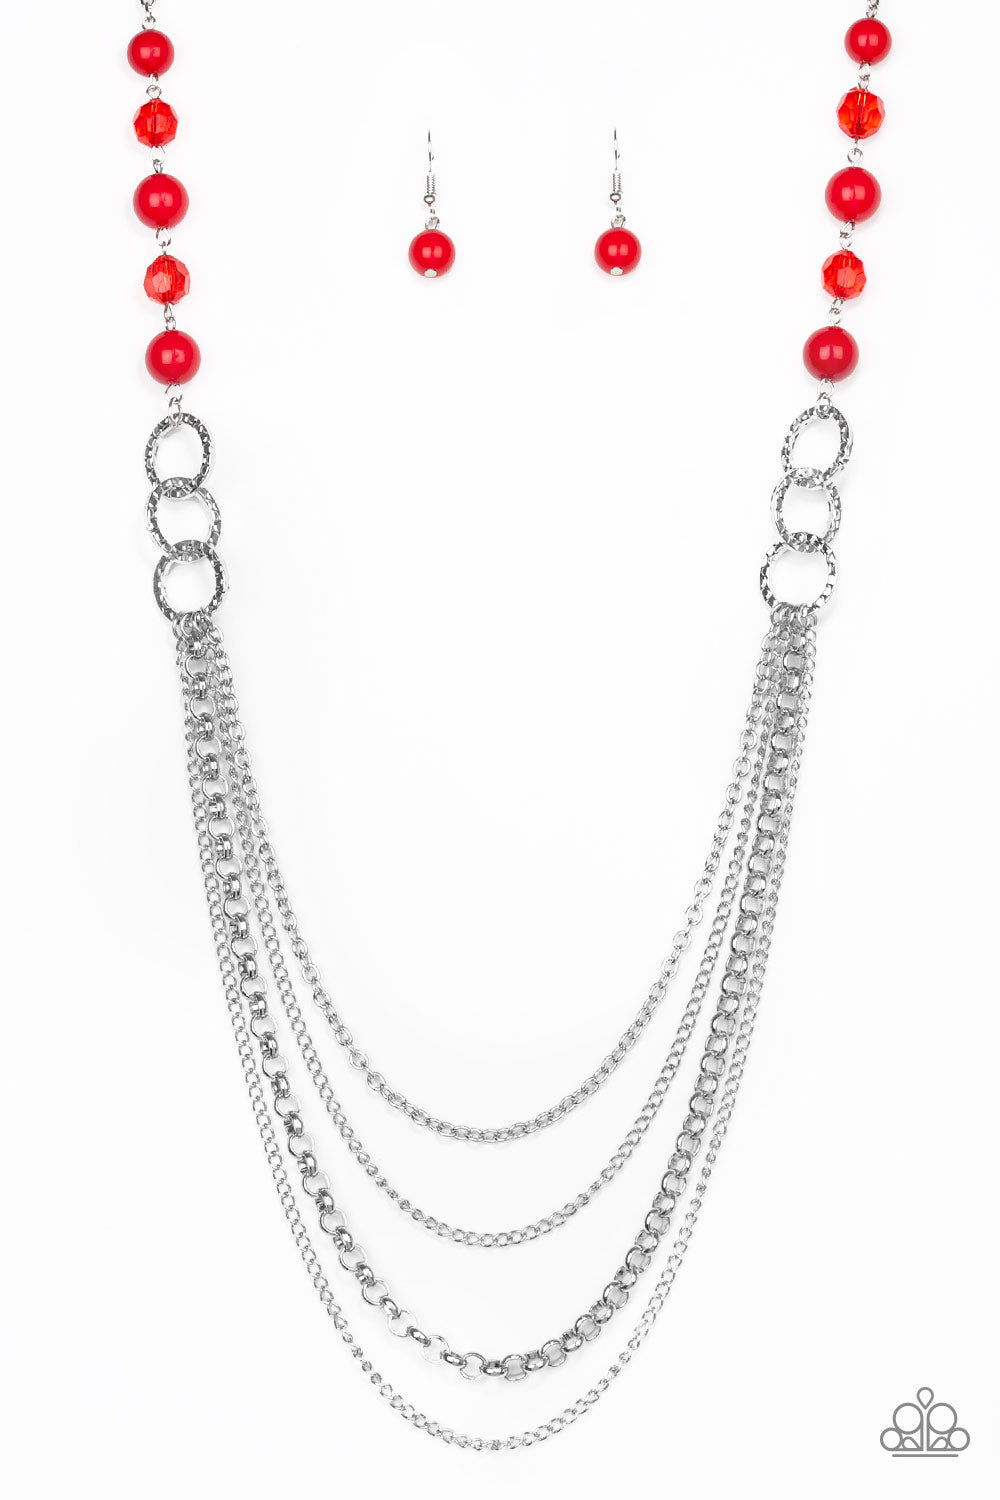 Vividly Vivid - red - Paparazzi necklace